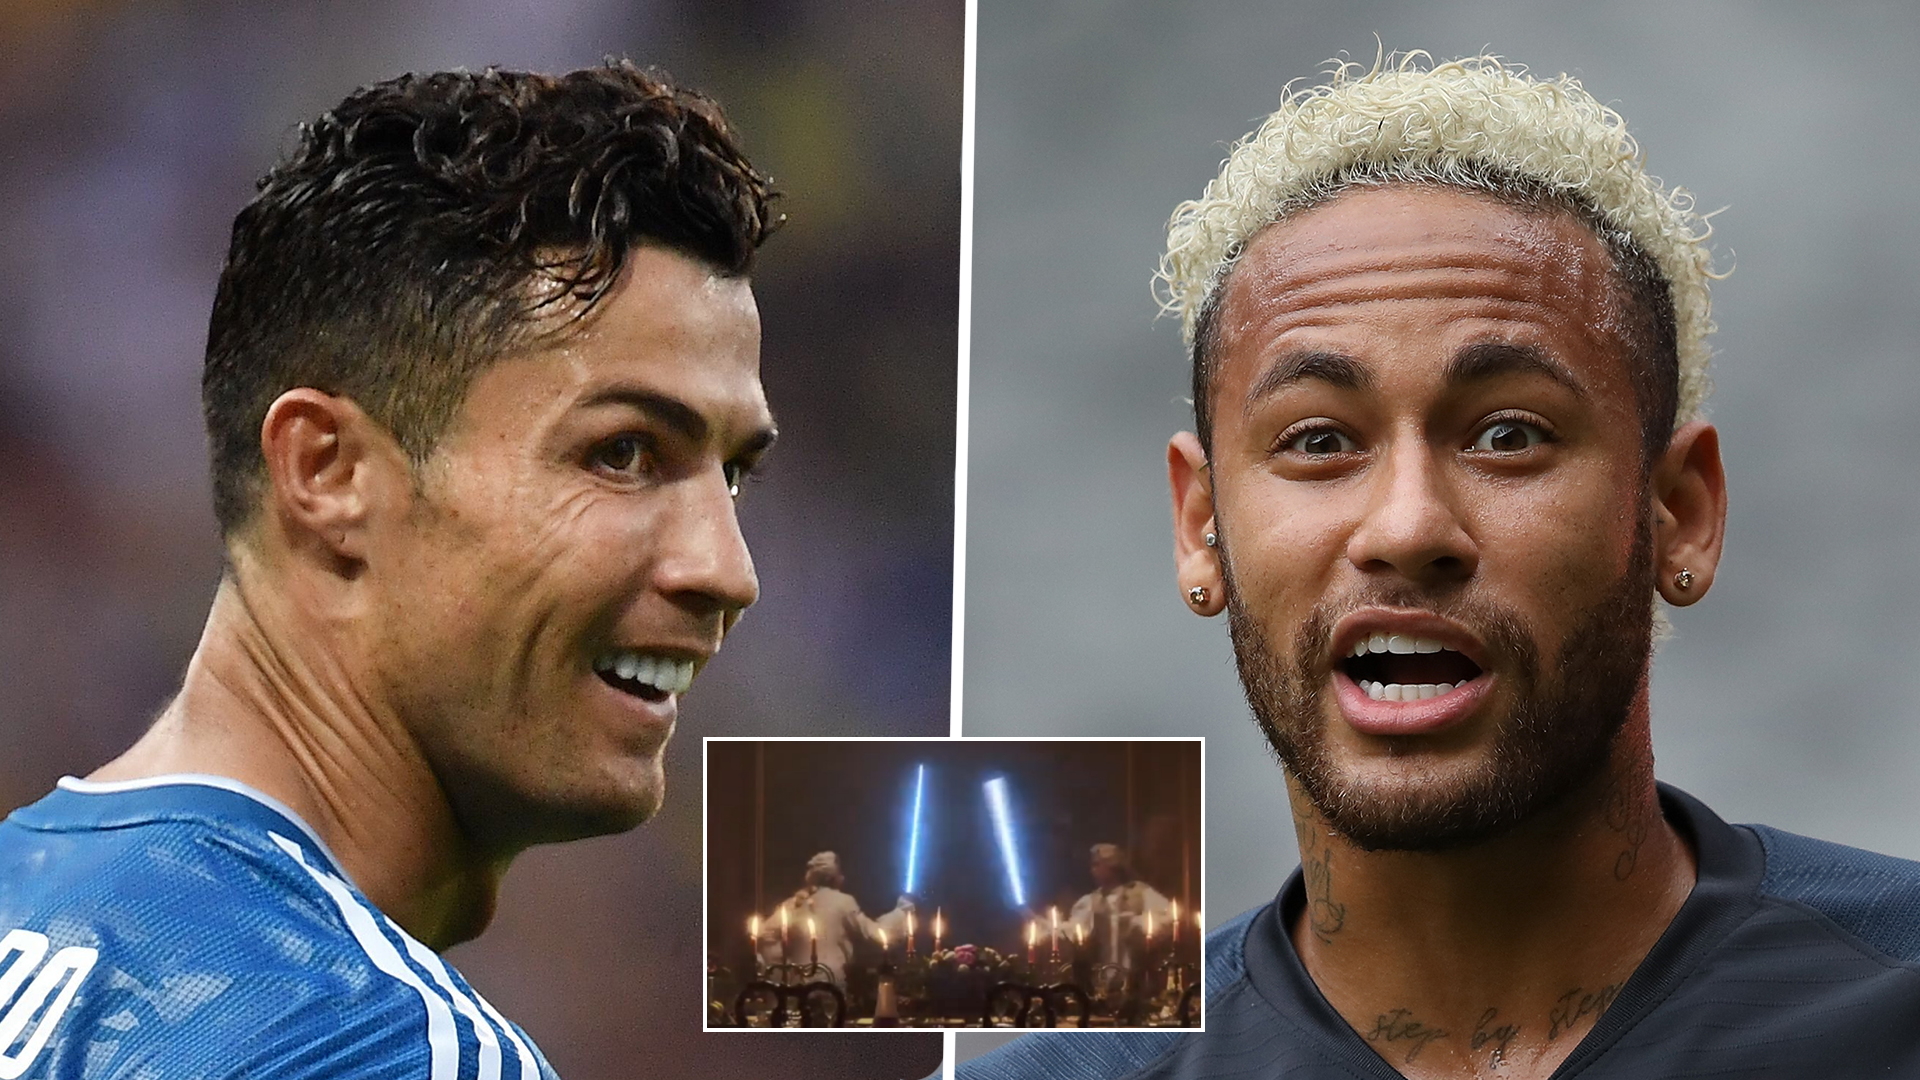 Cristiano Ronaldo & Neymar fight with lightsabers in bizarre advertisement